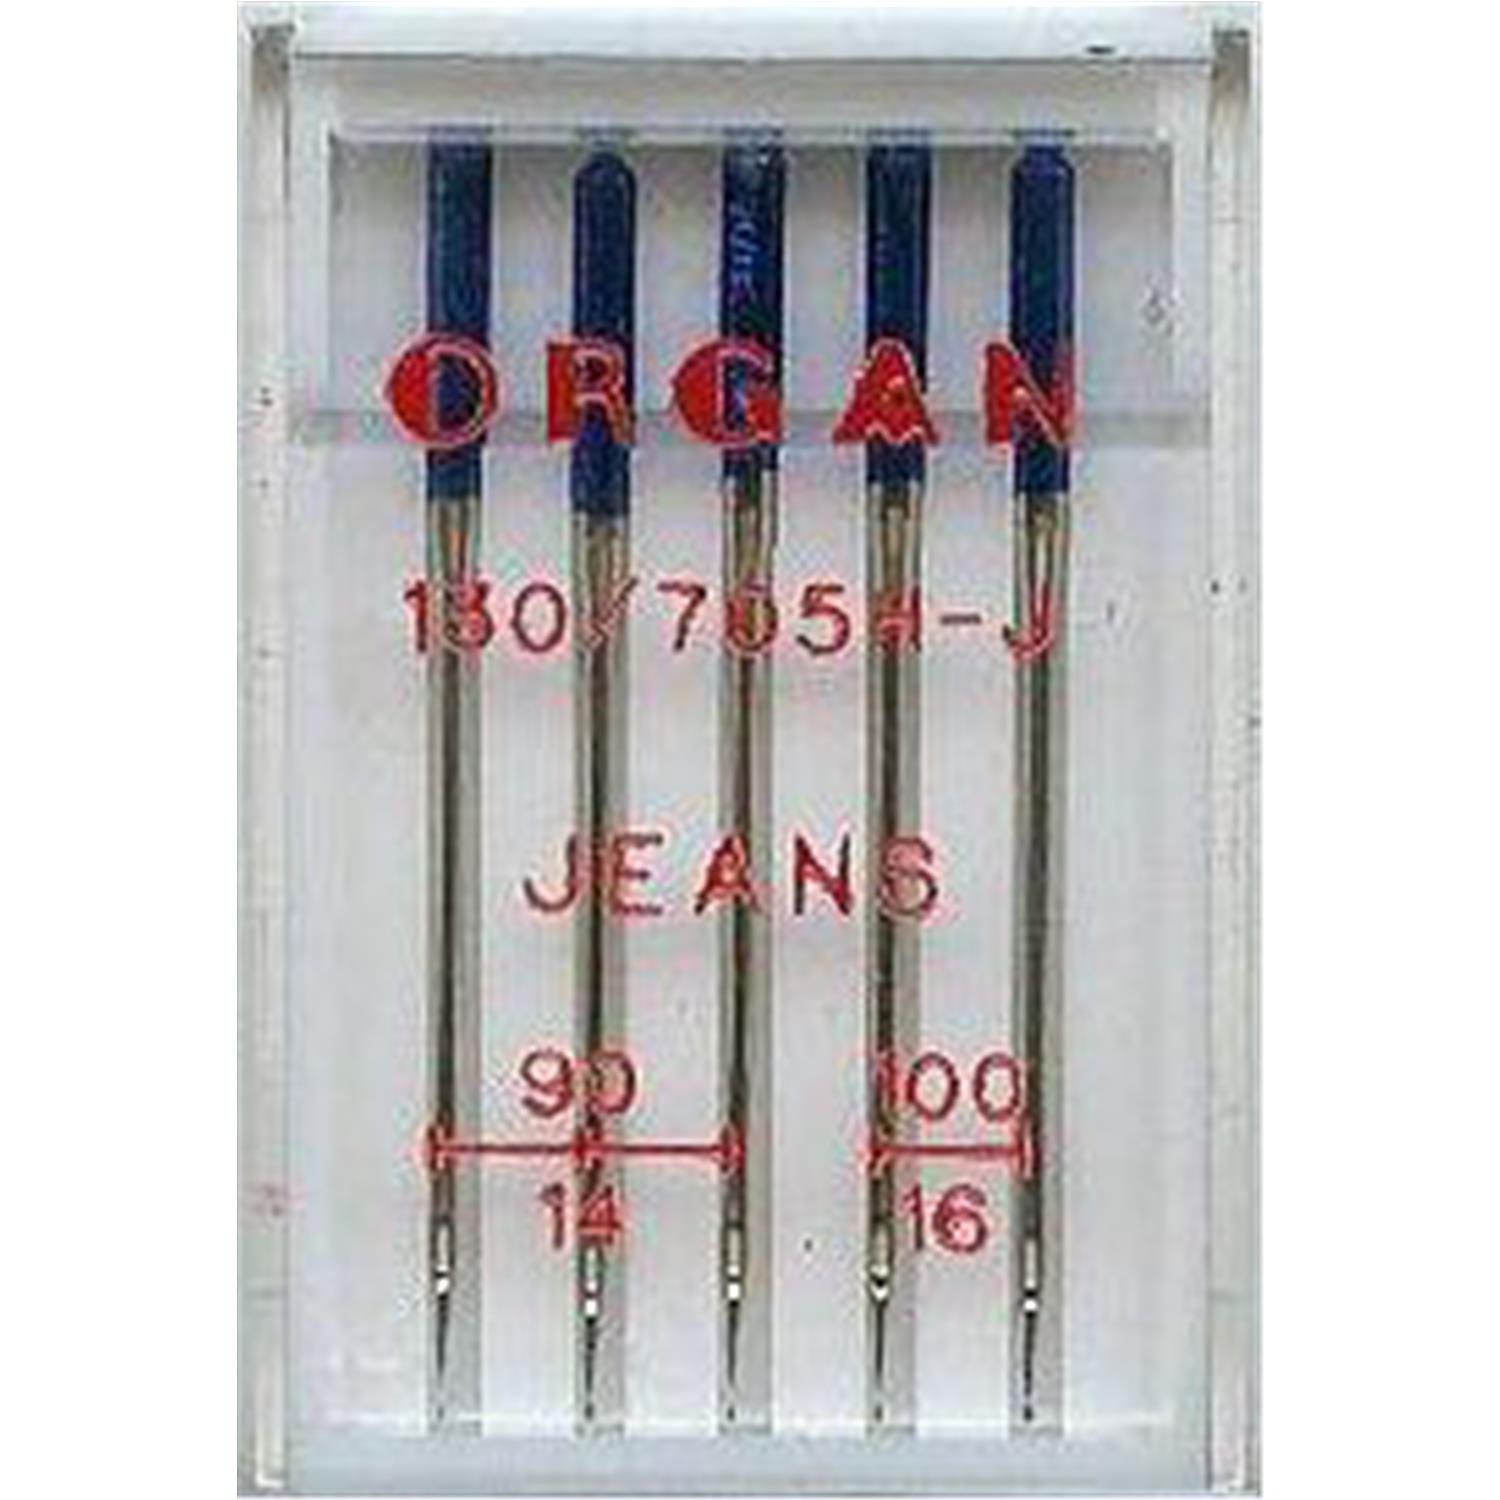 Nähmaschinennadeln Organ, Jeans MIX, Stärke 90, 100 #132